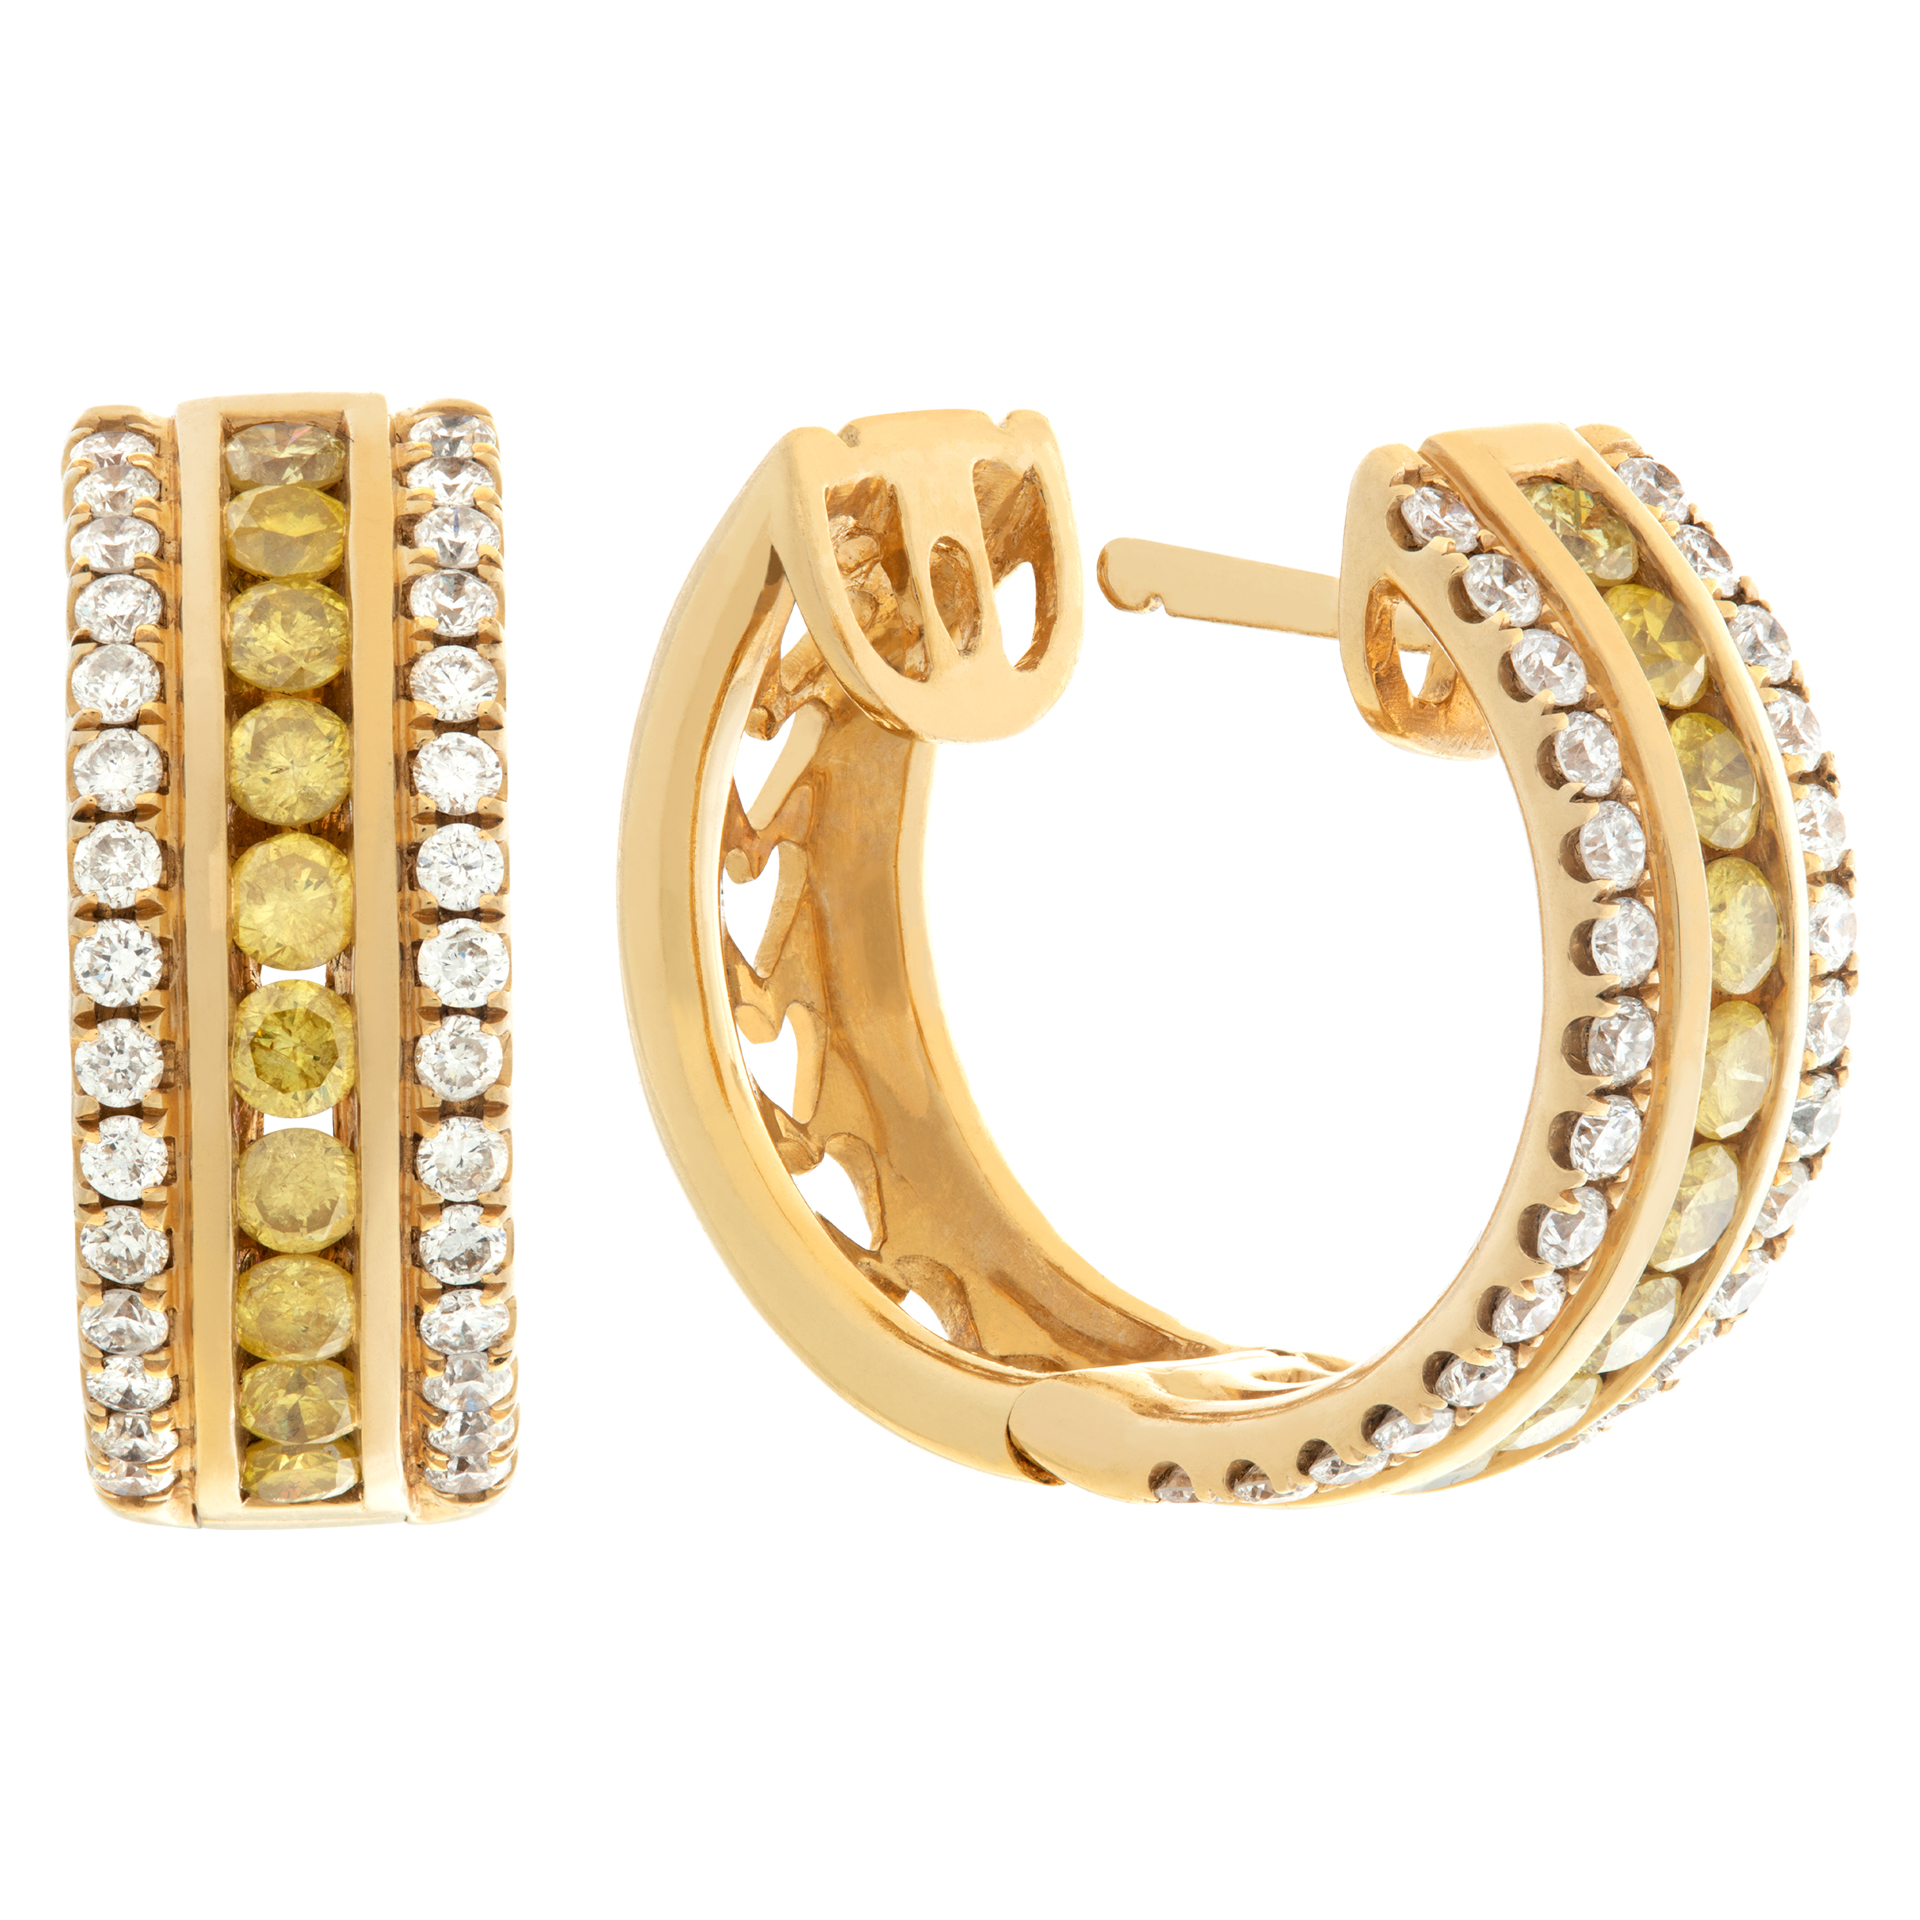 Yellow and white diamond huggie earrings in 18k yellow gold